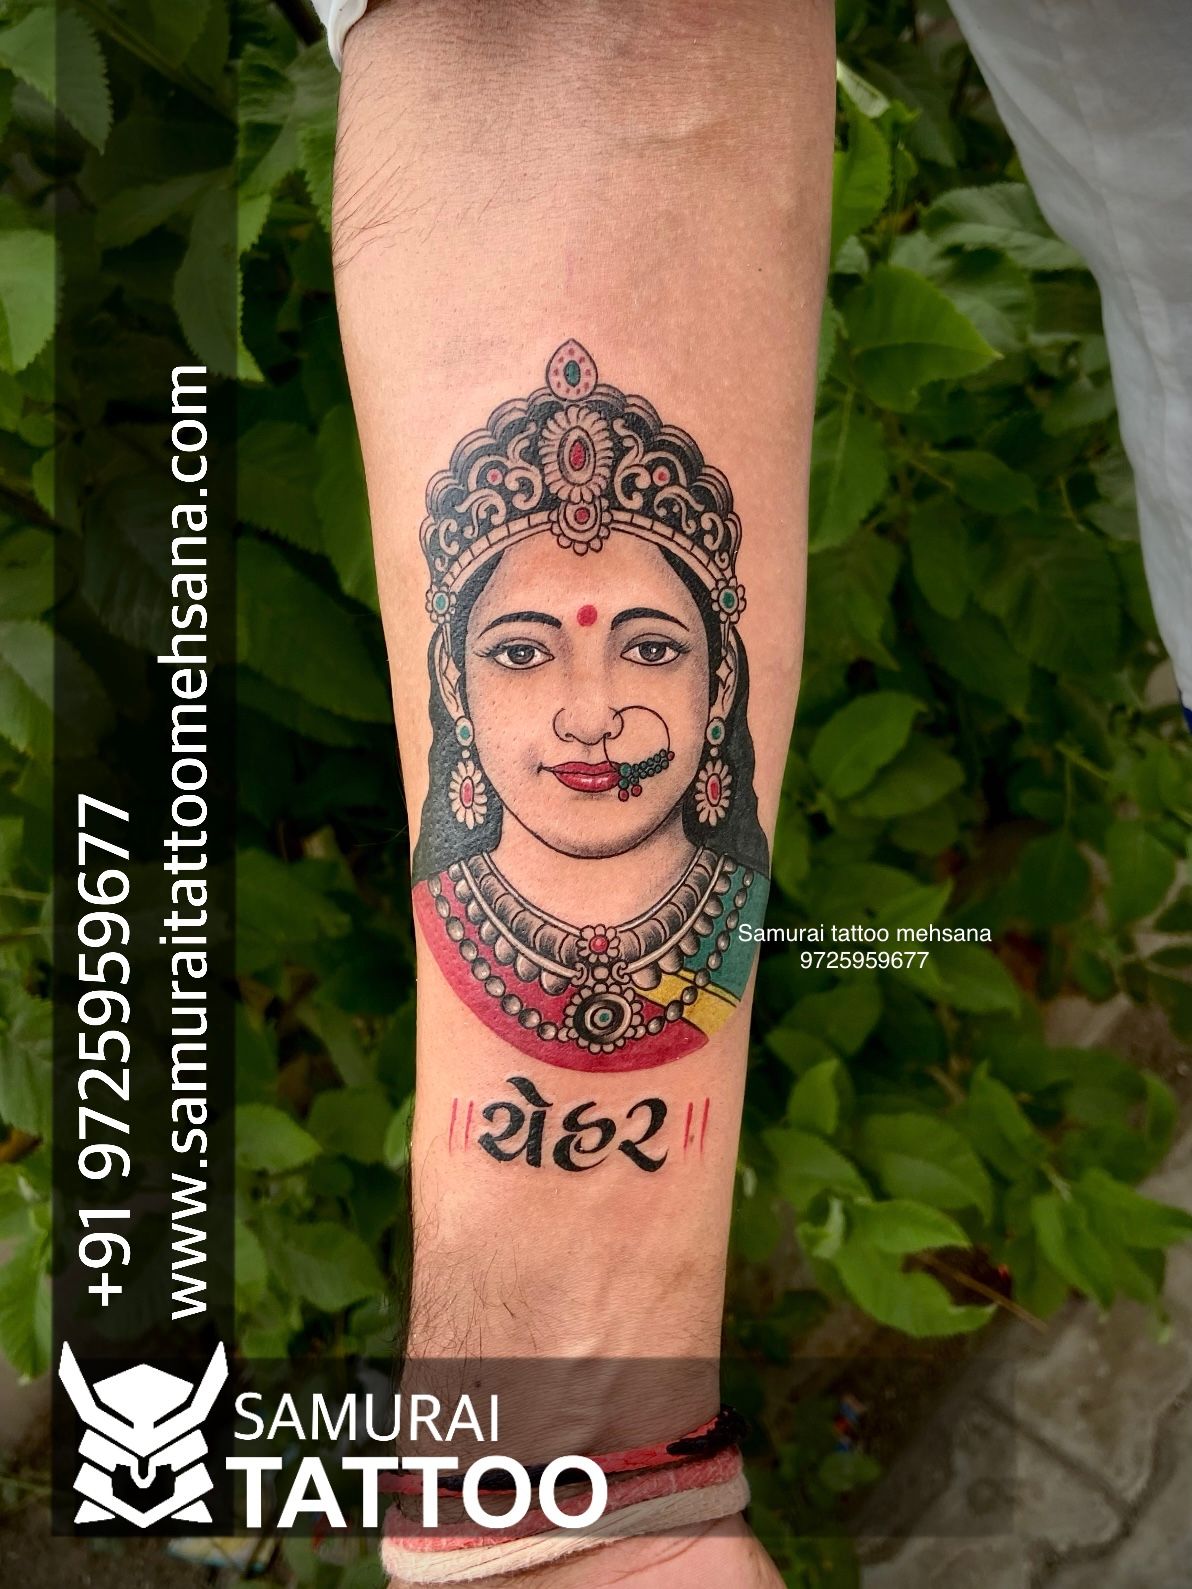 Tattoo uploaded by Vipul Chaudhary • Chehar maa tattoo |Maa chehar tattoo  |Chehar tattoo |Chehar maa nu tattoo |Chehar mataji nu tattoo • Tattoodo